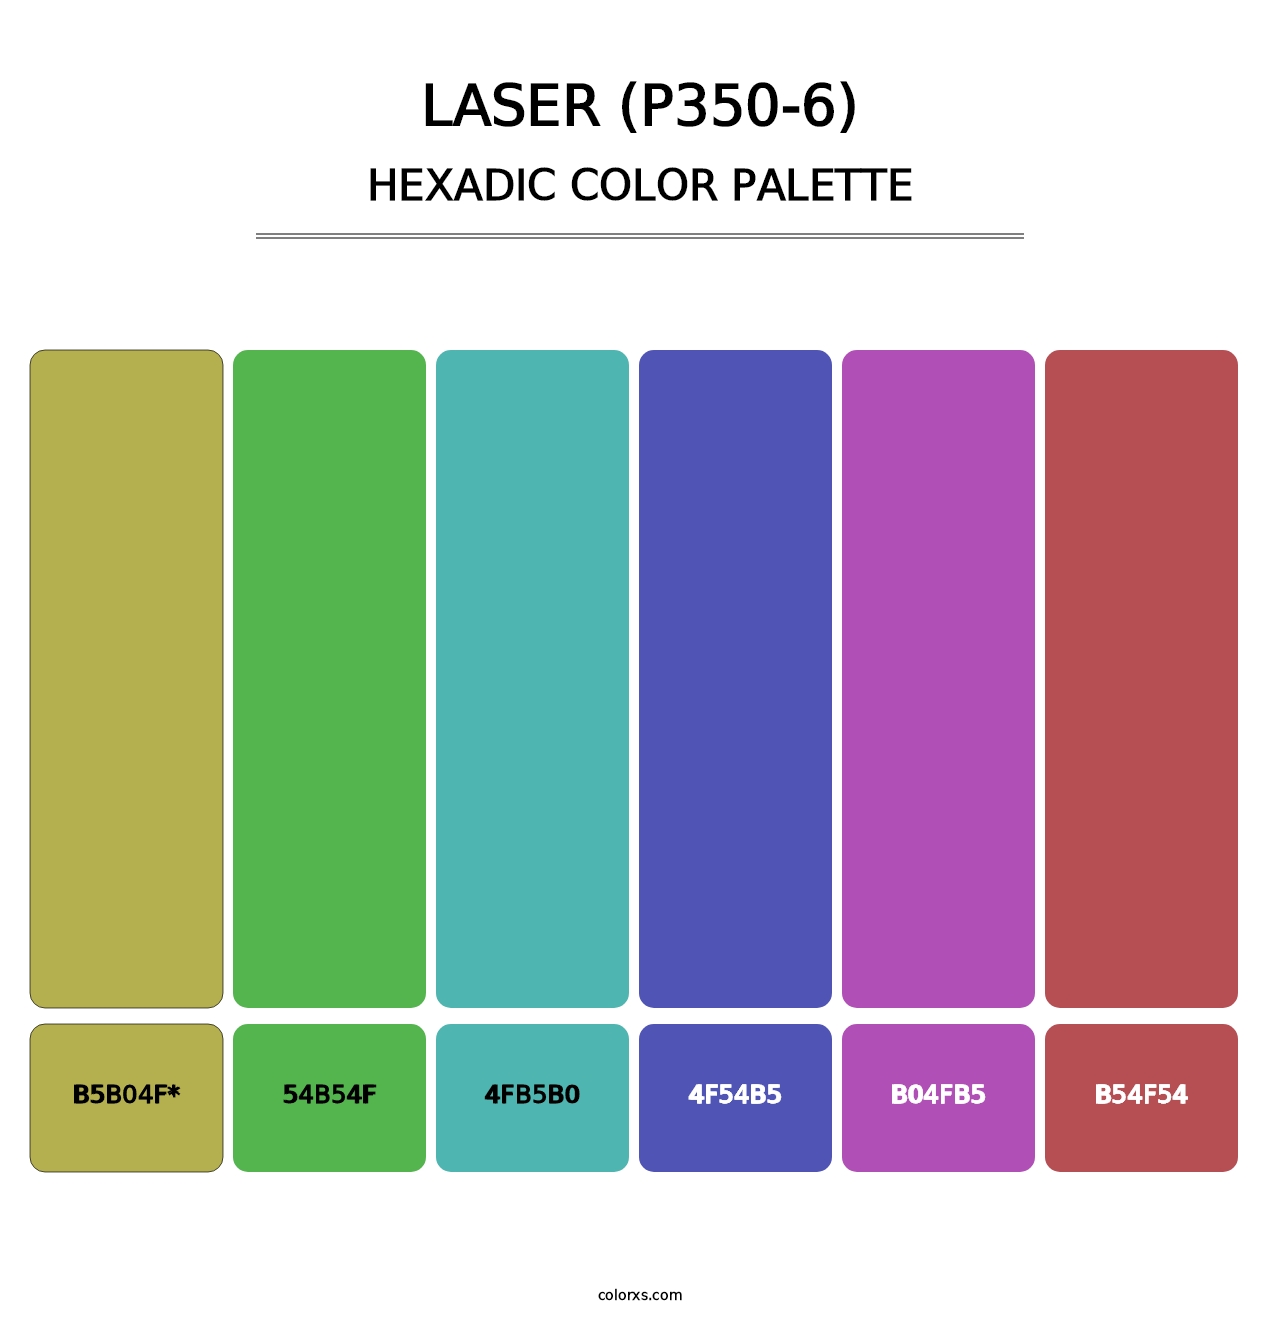 Laser (P350-6) - Hexadic Color Palette